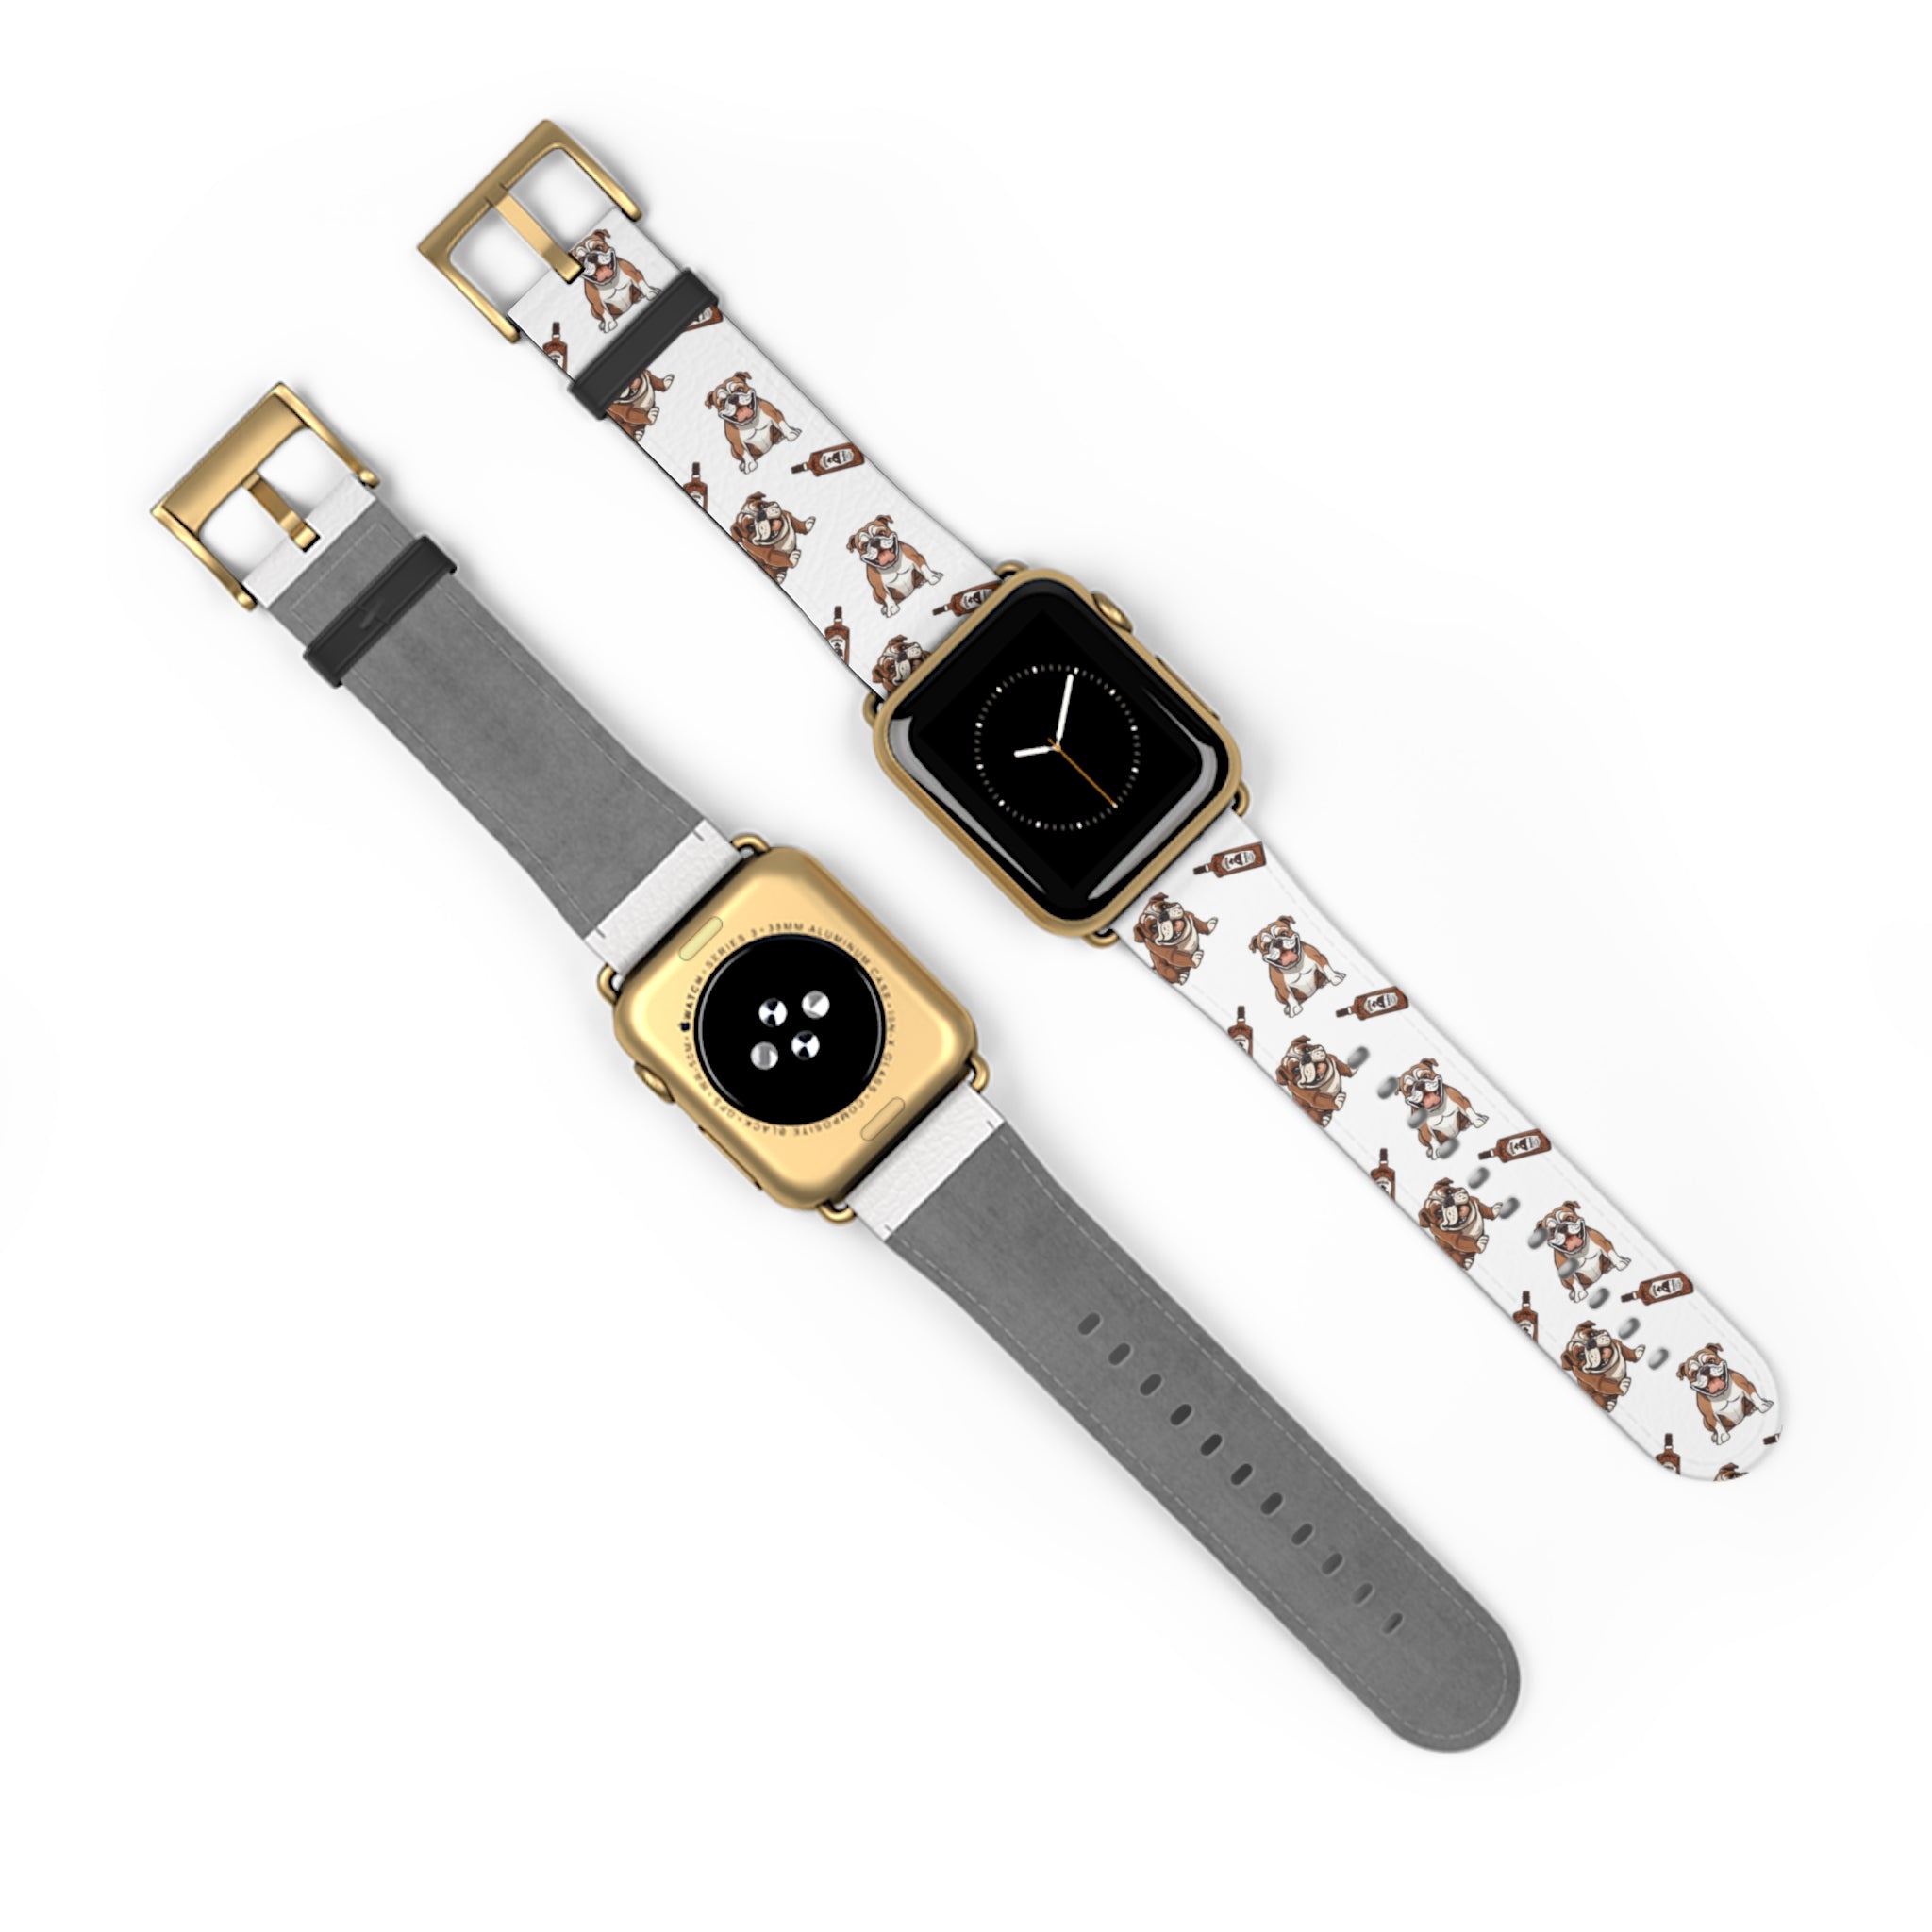 Bulldog Apple Watch Bands (English/Bourbon)